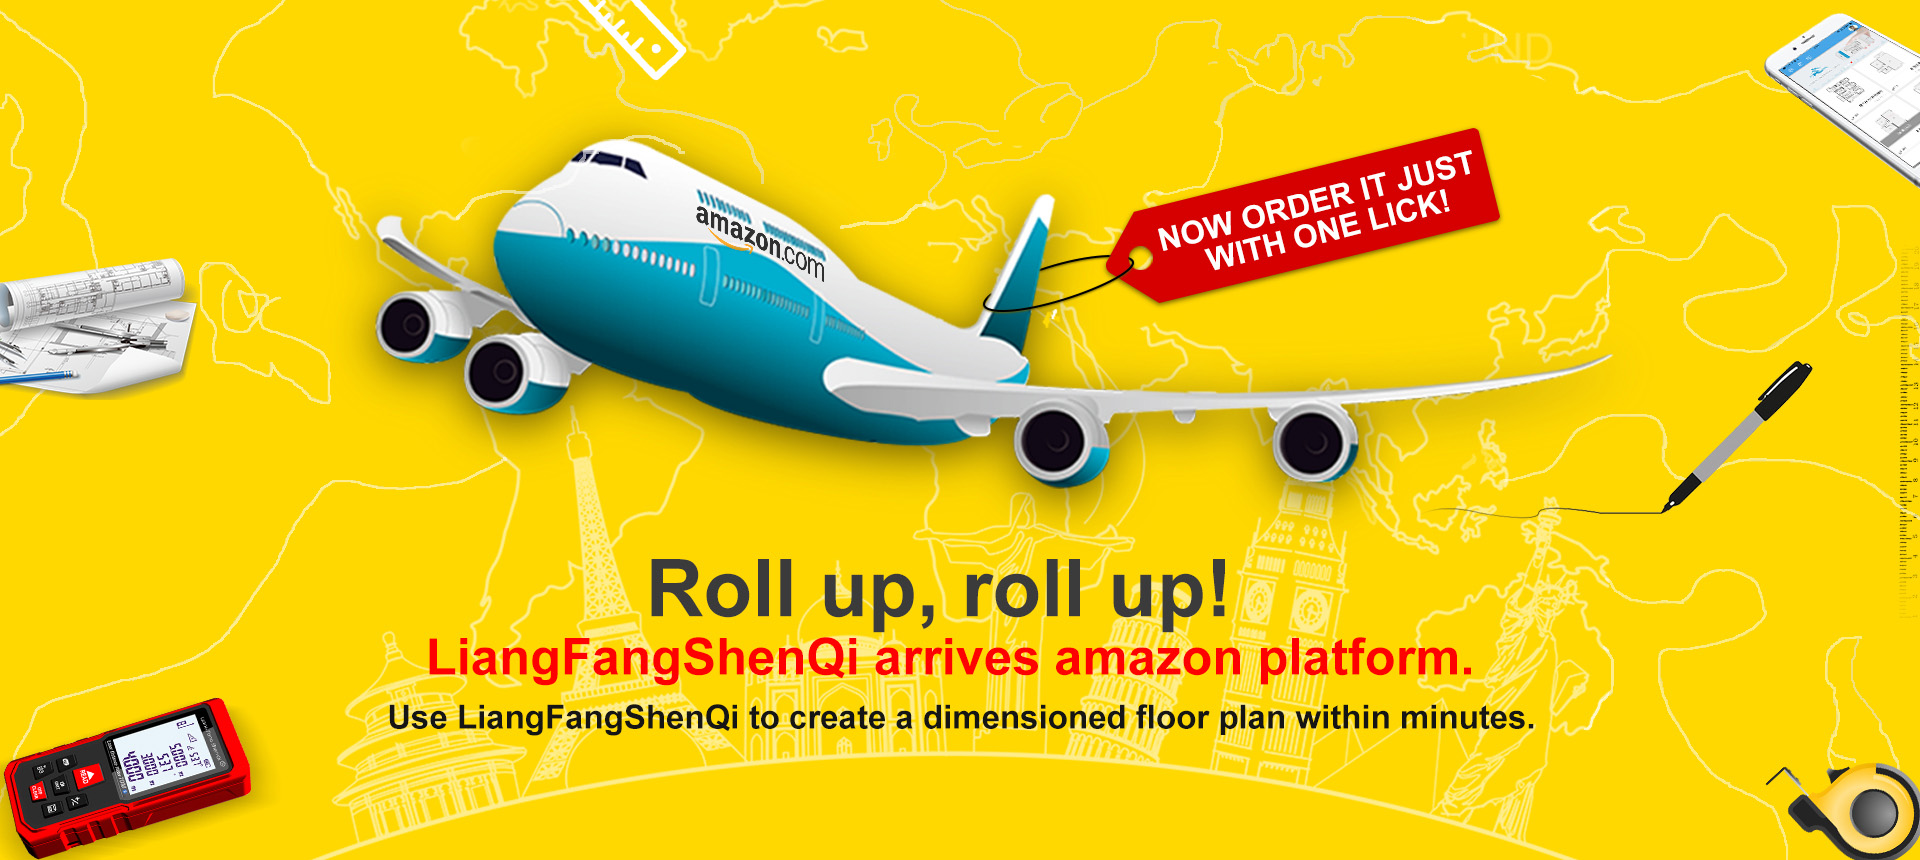 LiangFangShenQi arrives shopify amazon.jpg